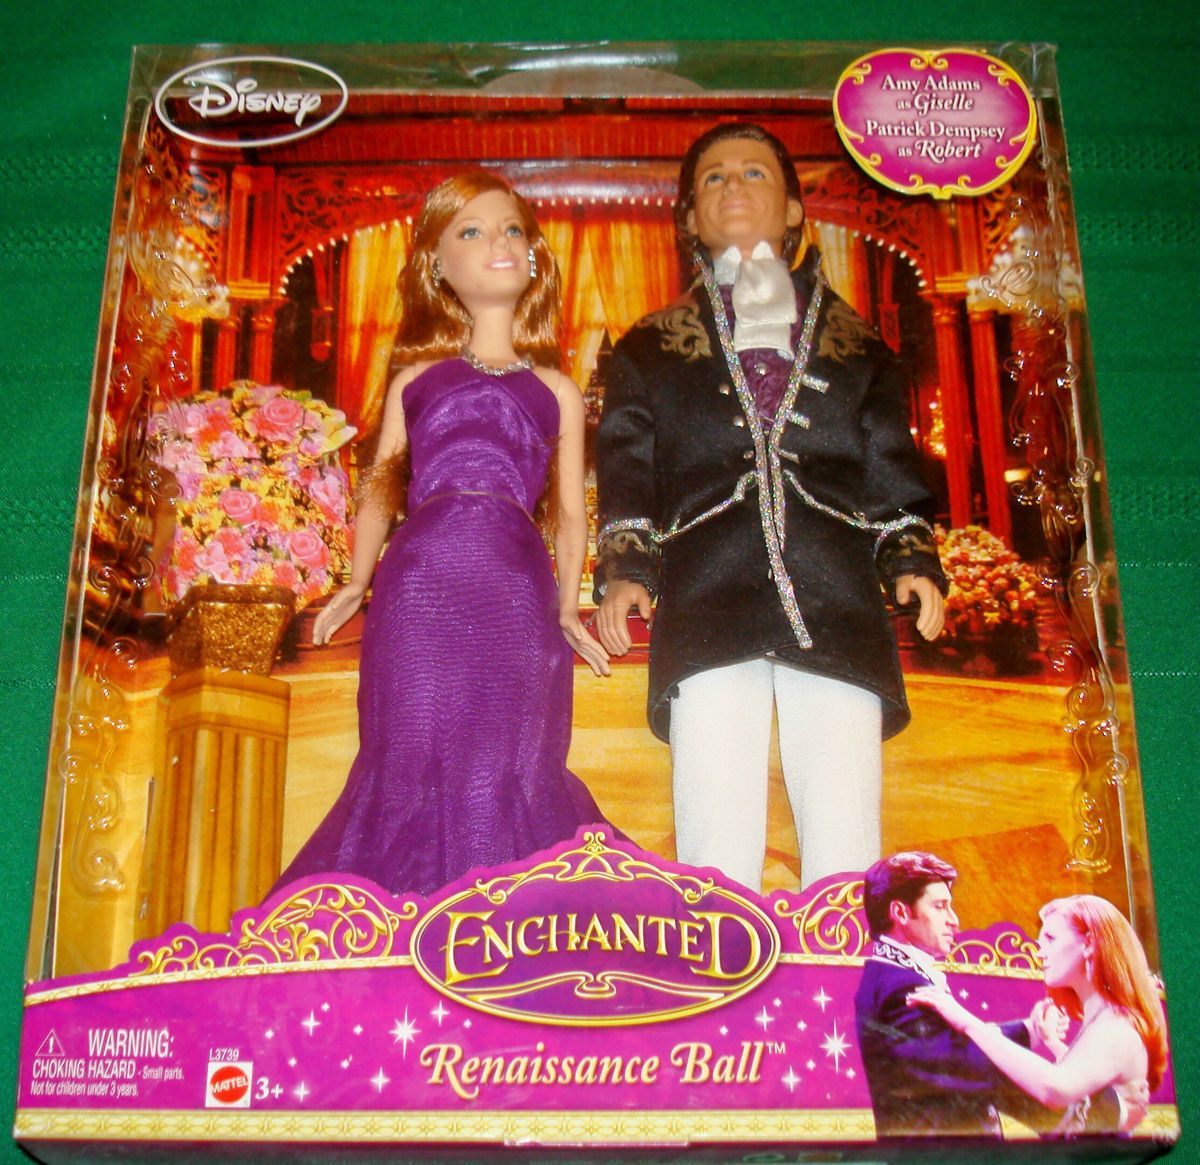   Enchanted Doll Mattel Giselle Amy Adams Robert Patrick Dempsey